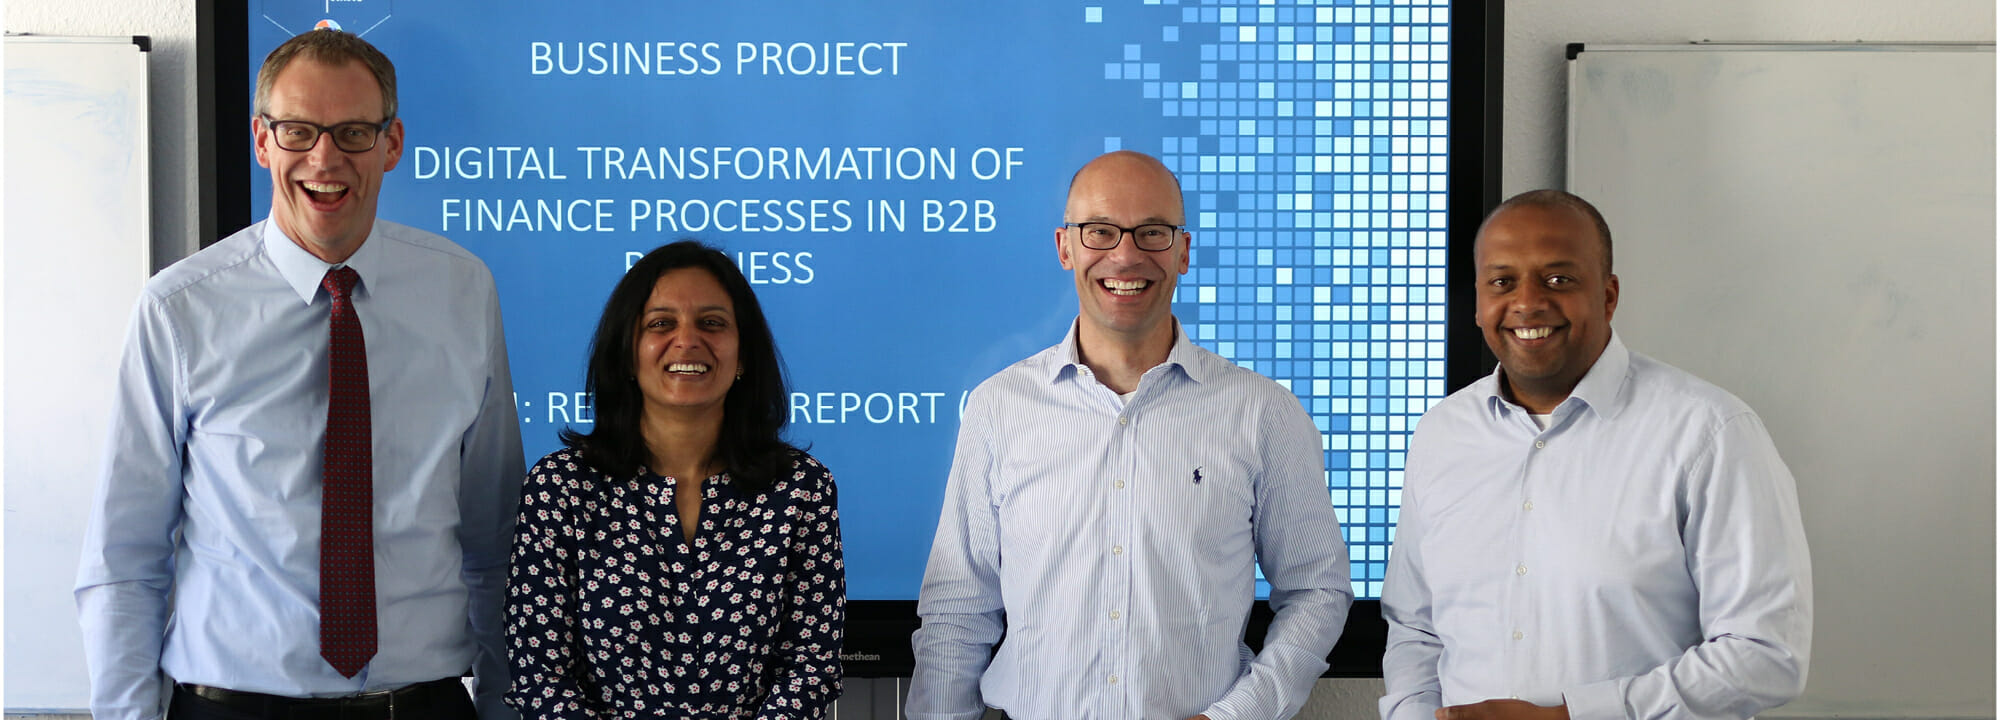 Accenture mandates B2B Business Project